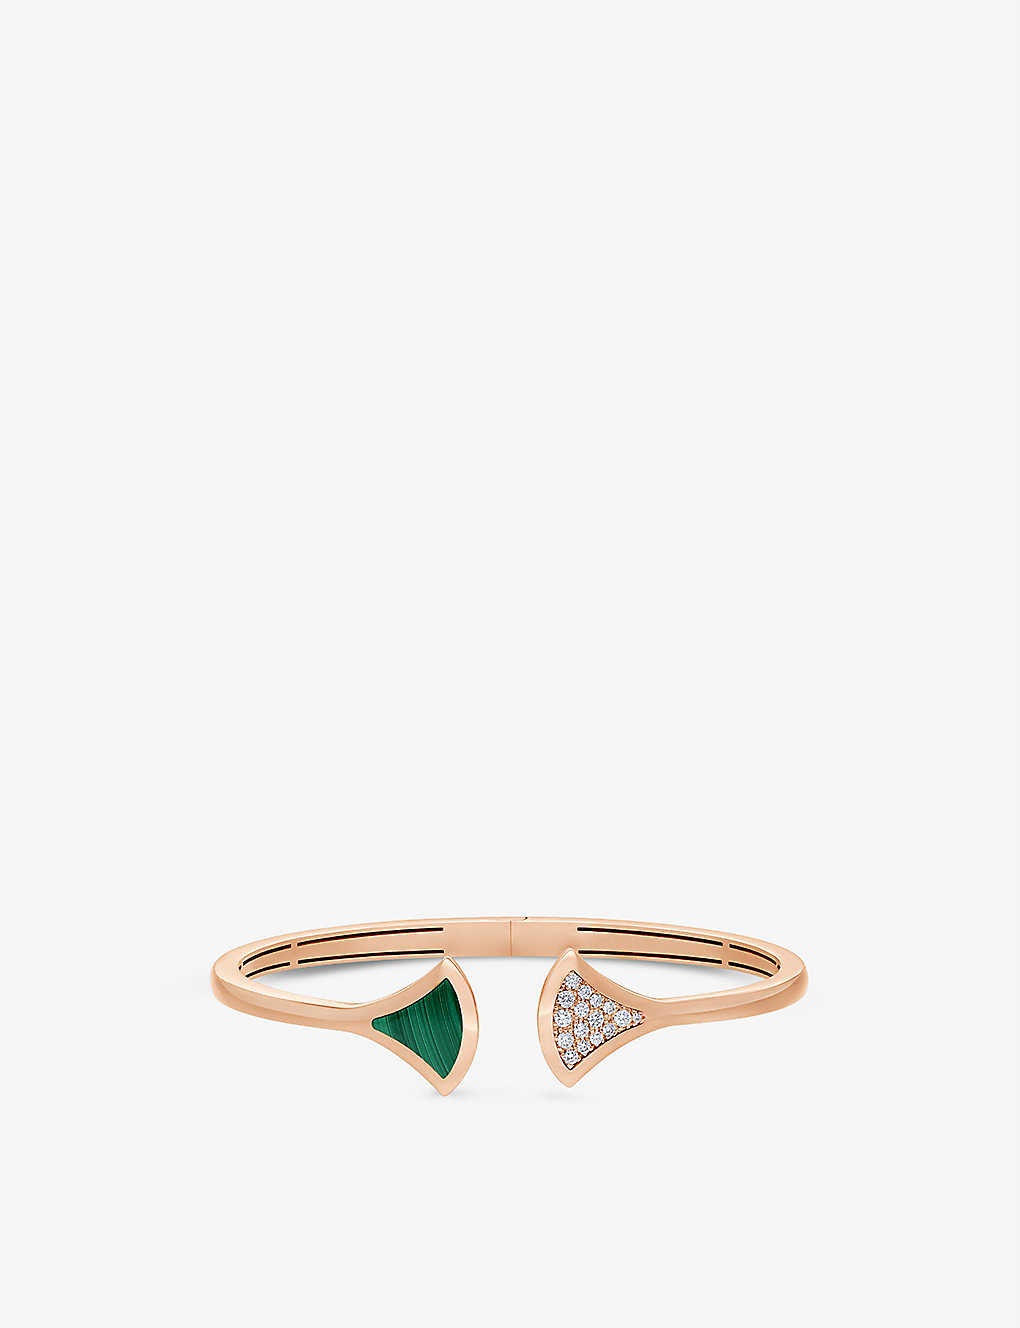 Diva's Dream 18ct rose-gold, malachite and 0.16ct brilliant-cut diamond bracelet - 2